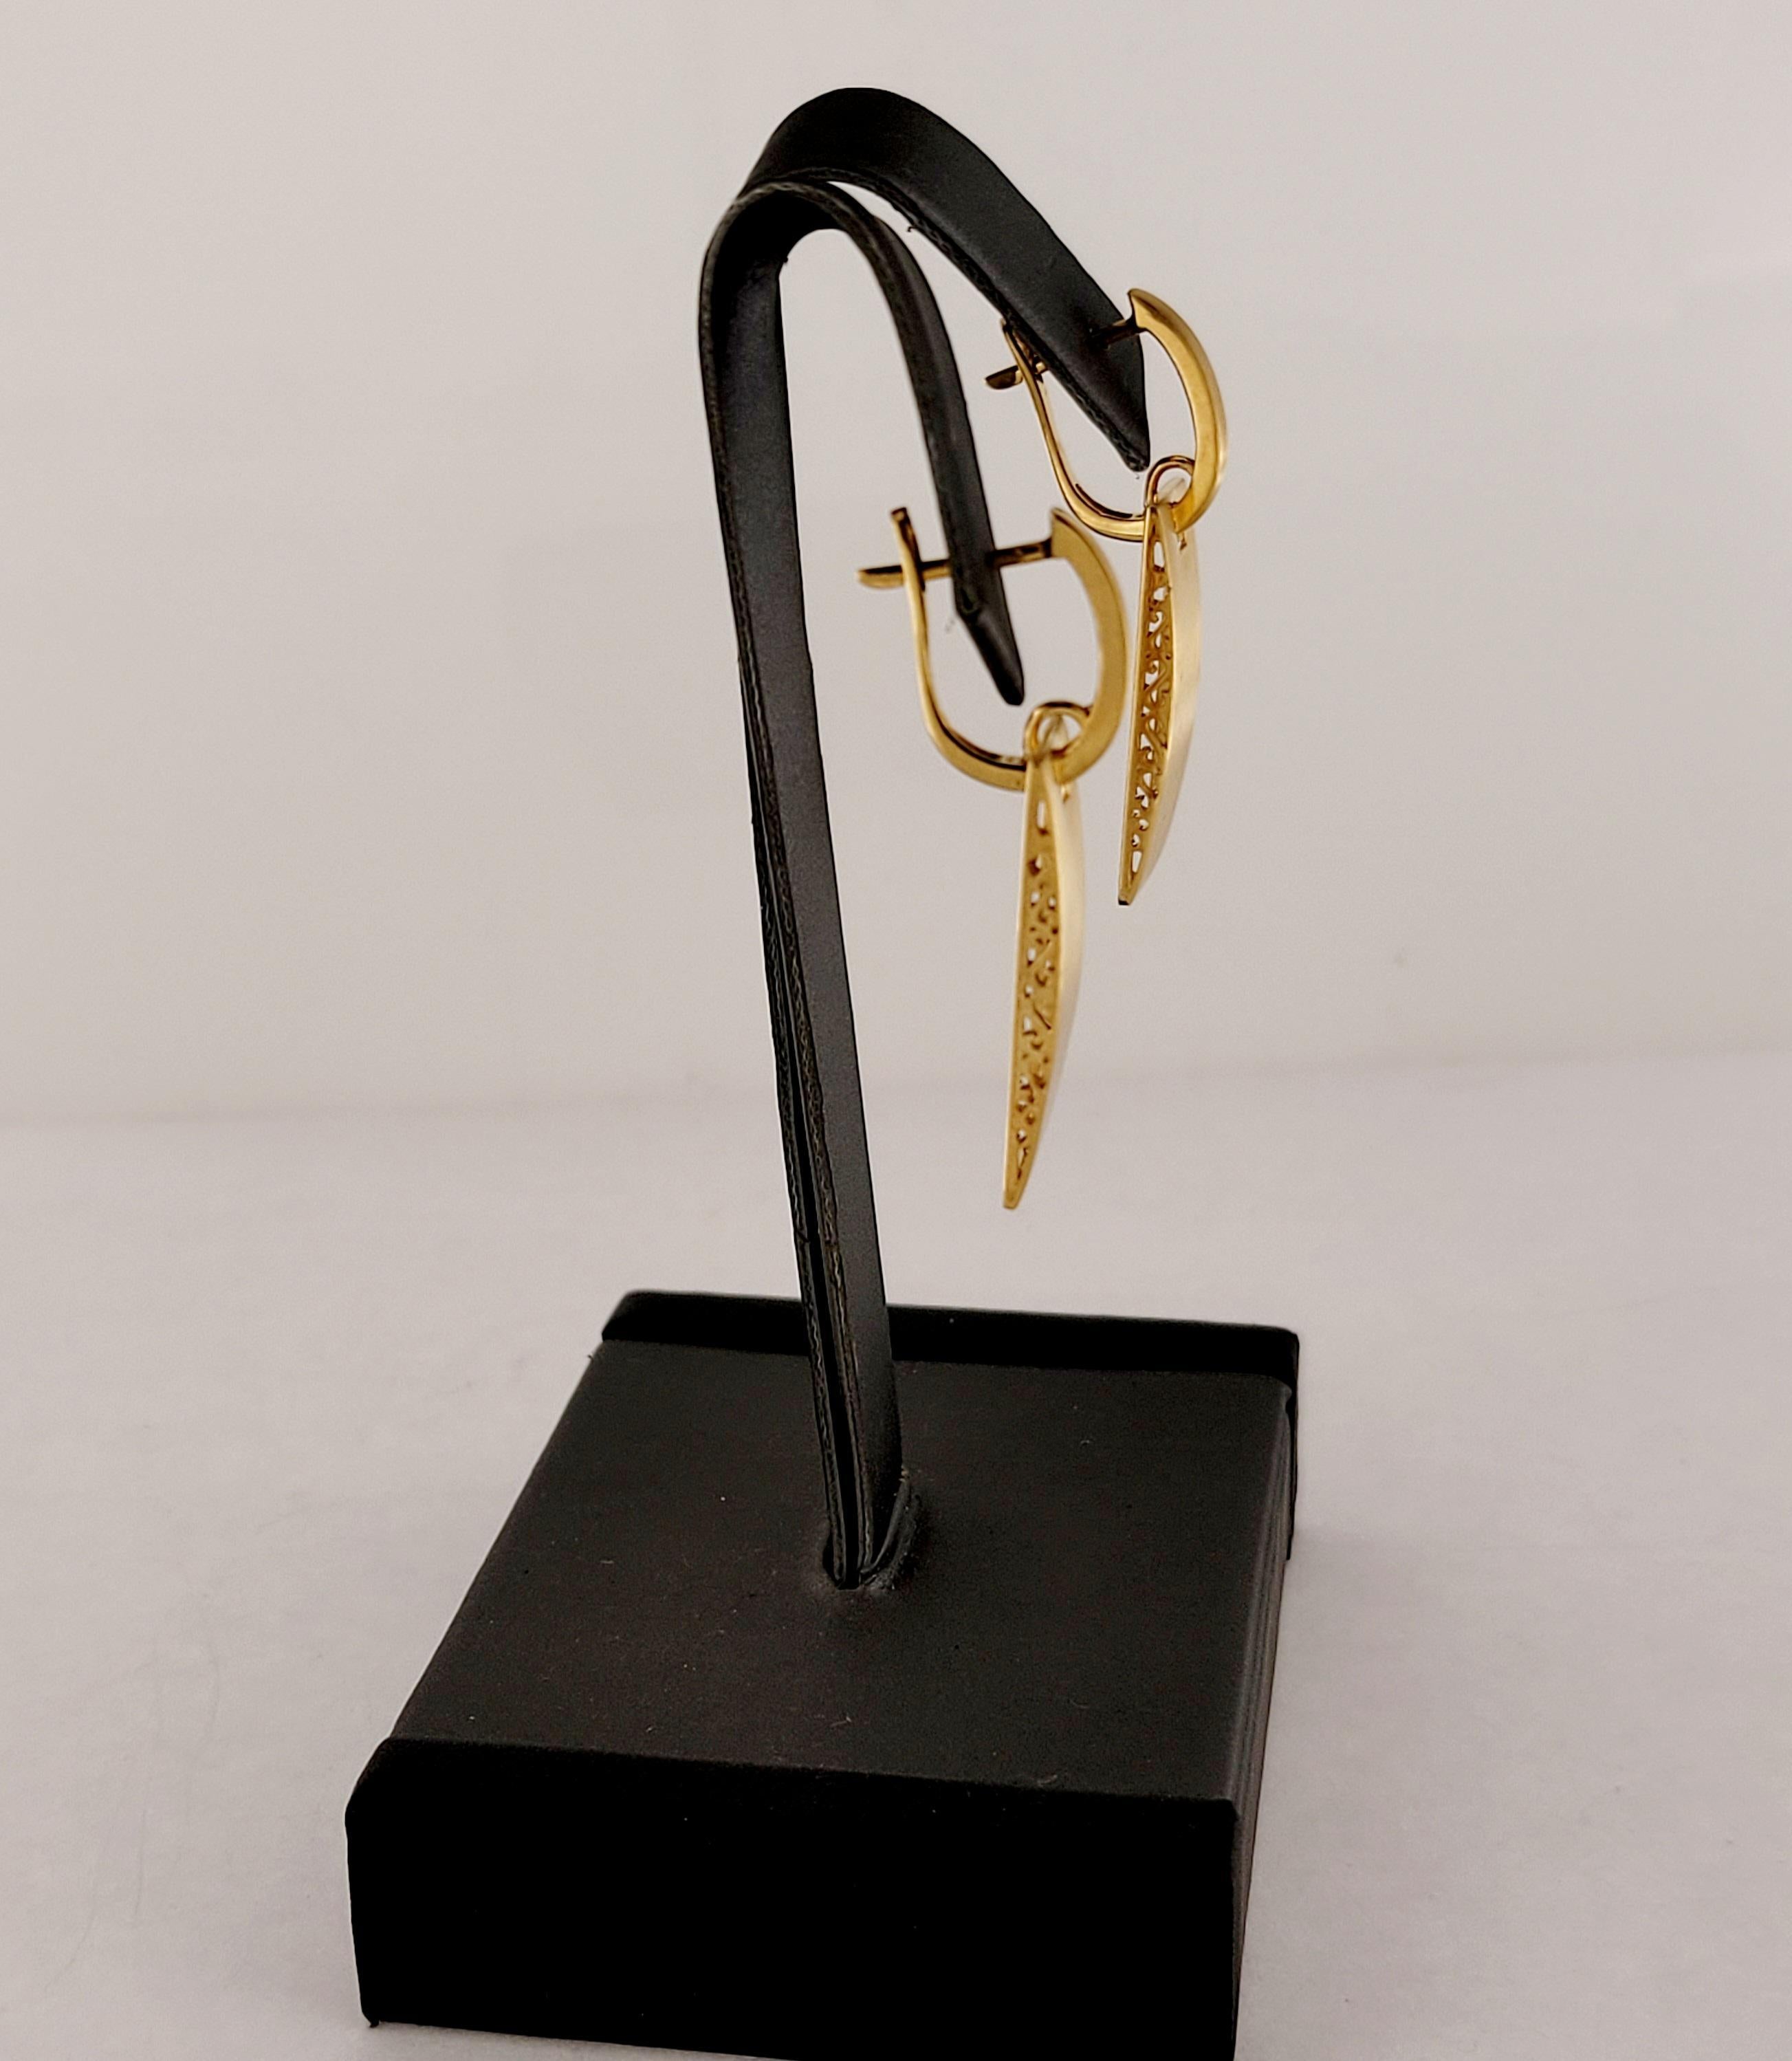 Handmade Earring
14K Yellow Gold
Earring 25mm long
Width 10.2mm
Hight 2.7mm
Weight 5.9gr
Retail Price $1800